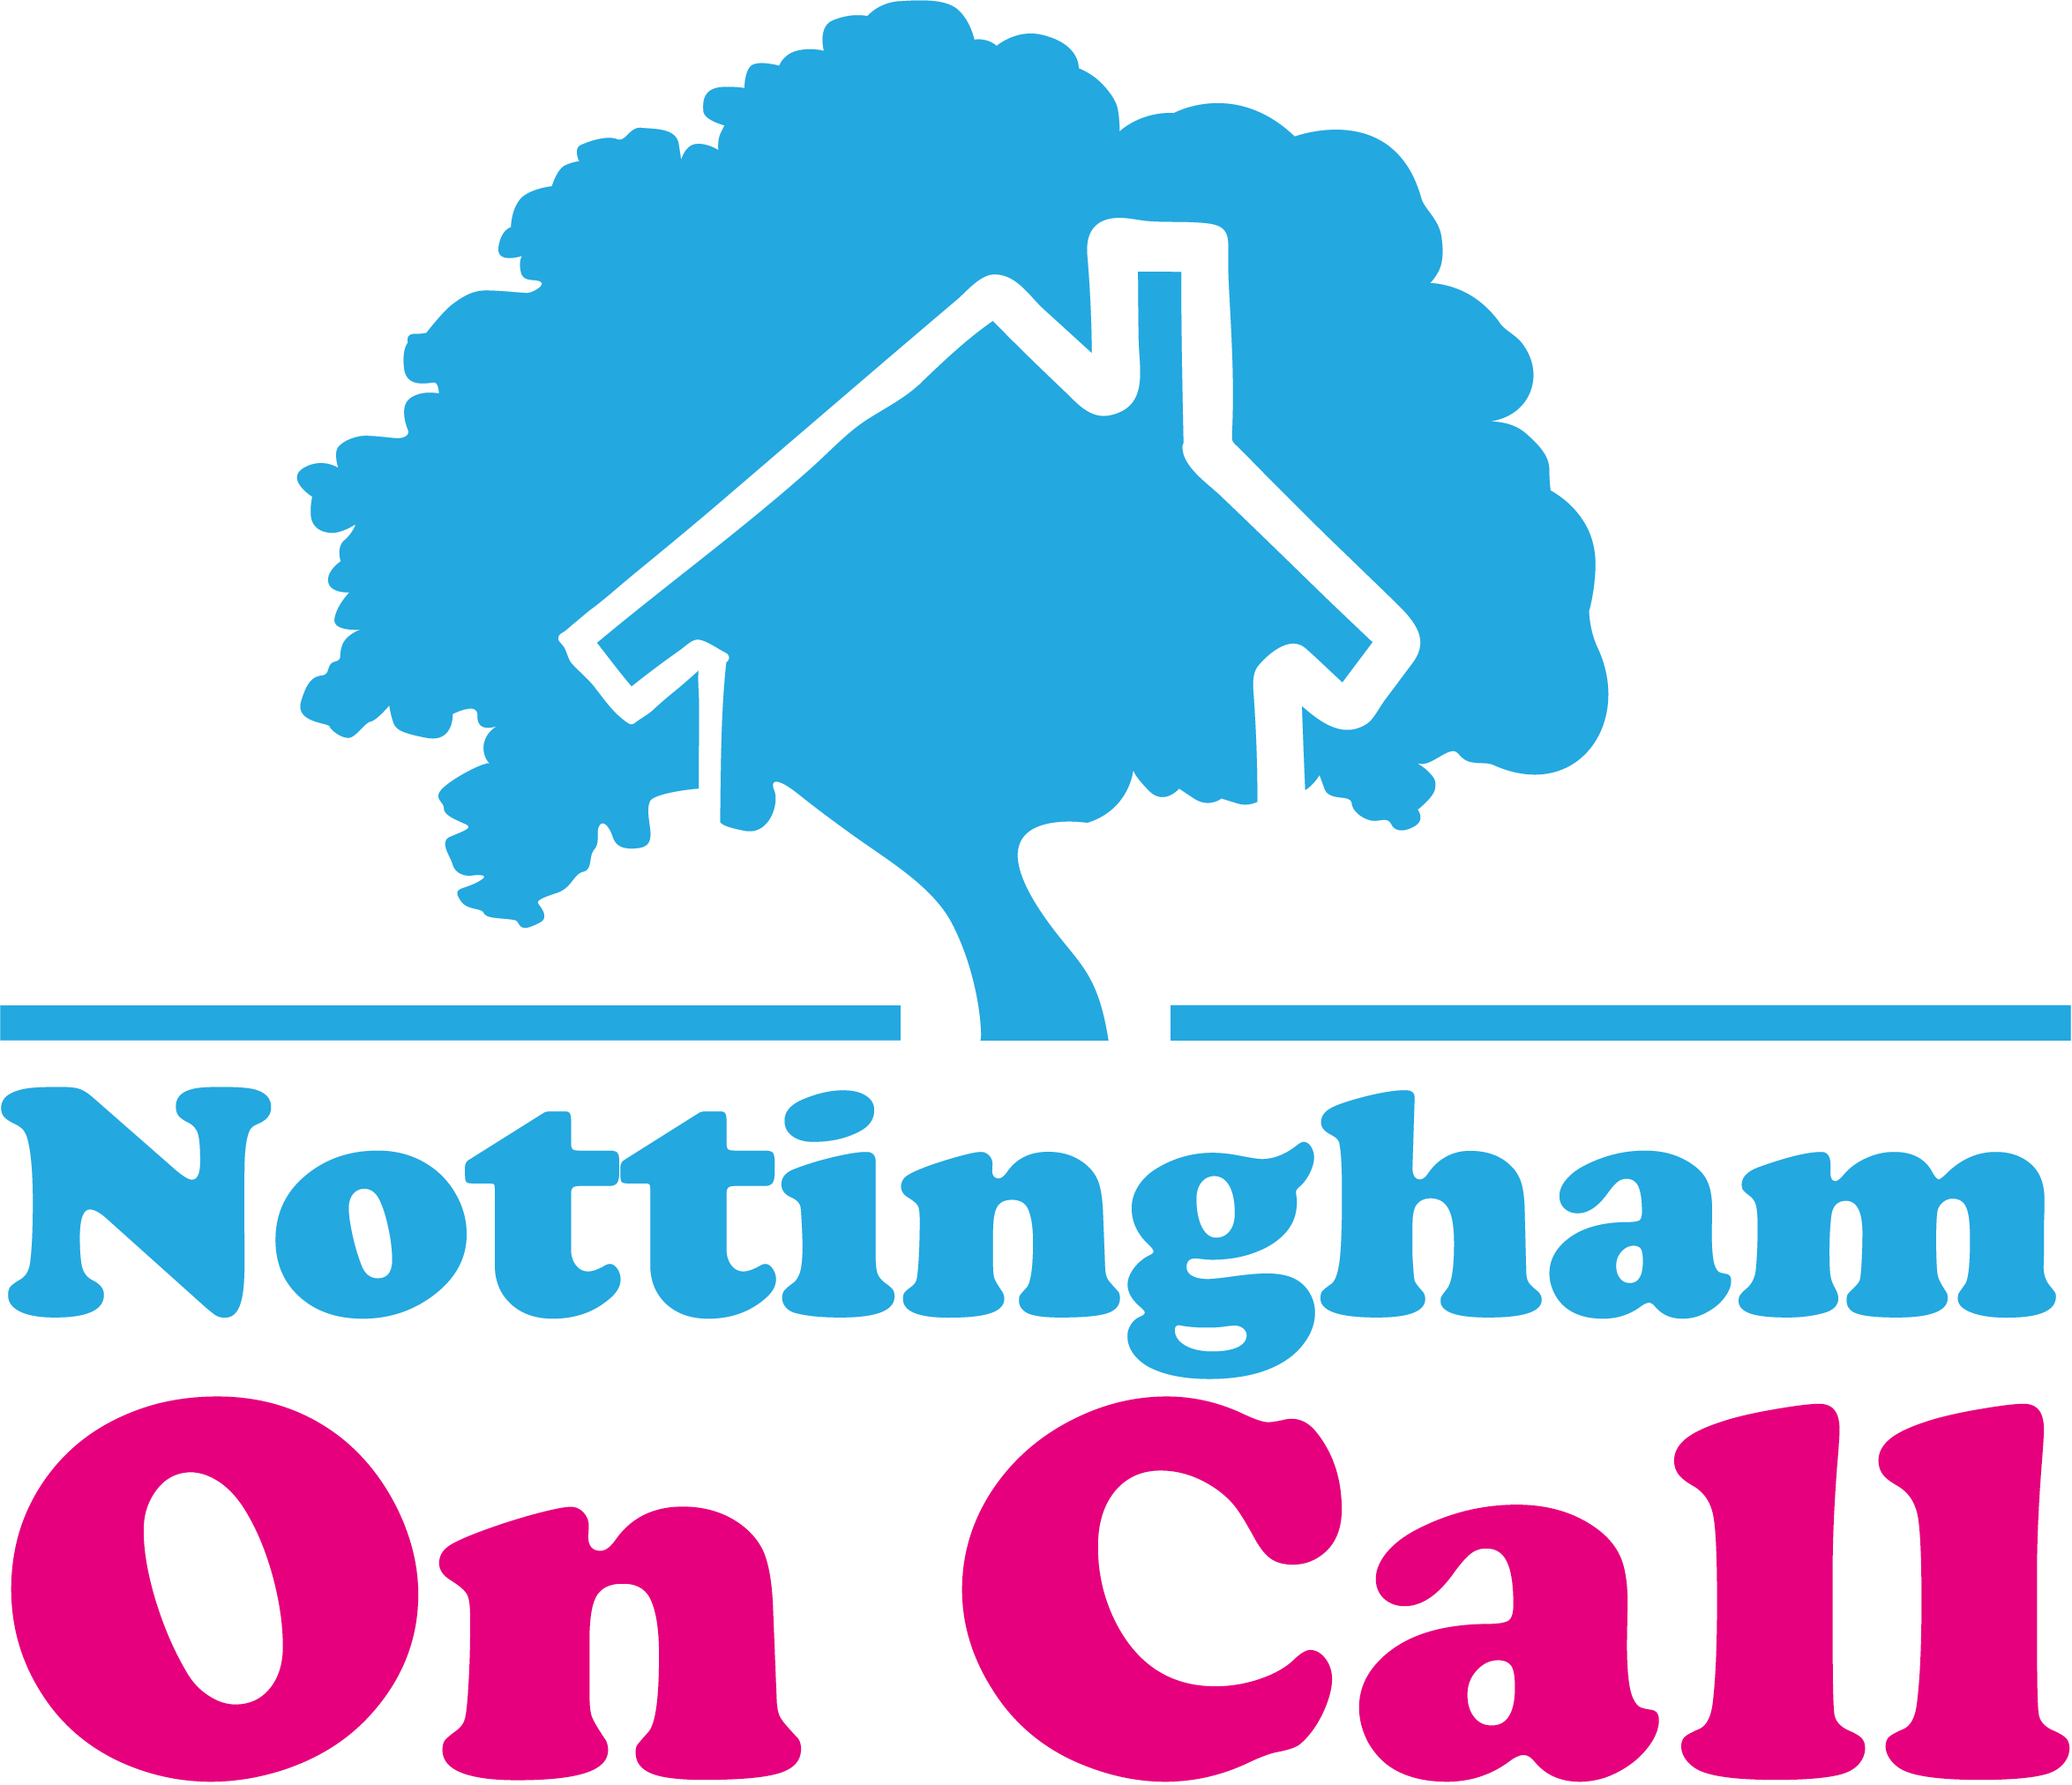 Nottingham On Call logo Square